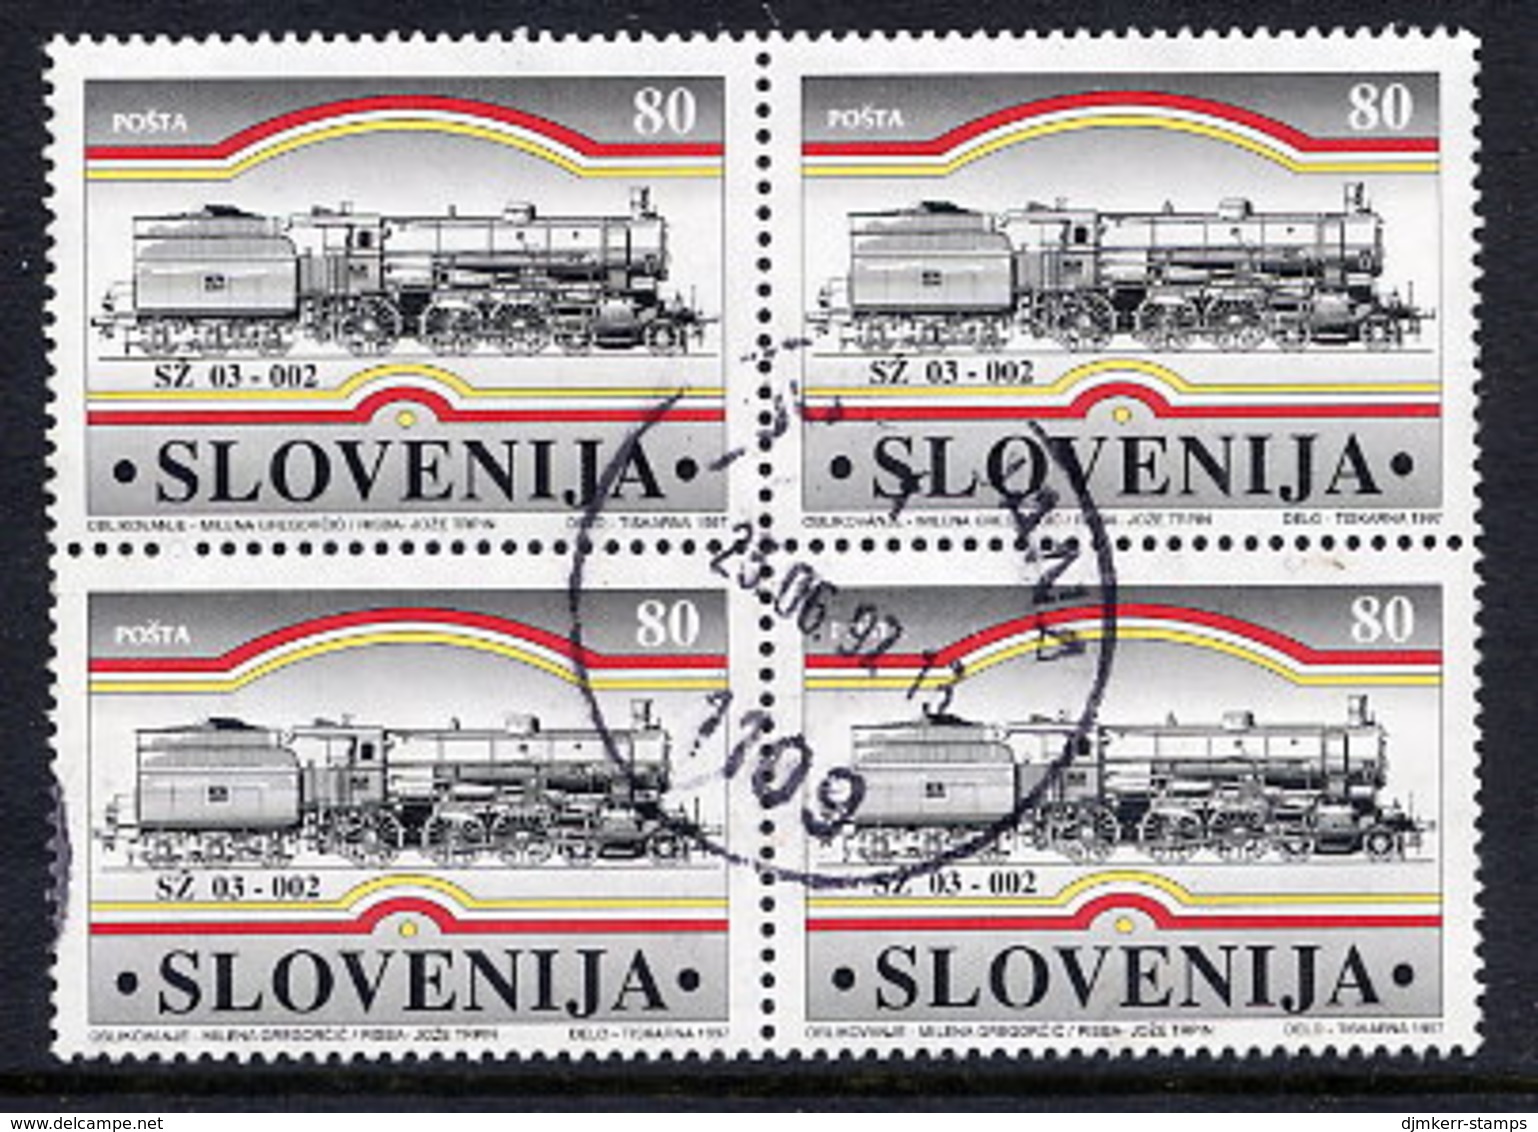 SLOVENIA 1997 Trieste Railway  Used Block Of 4.  Michel 188 - Slovenië